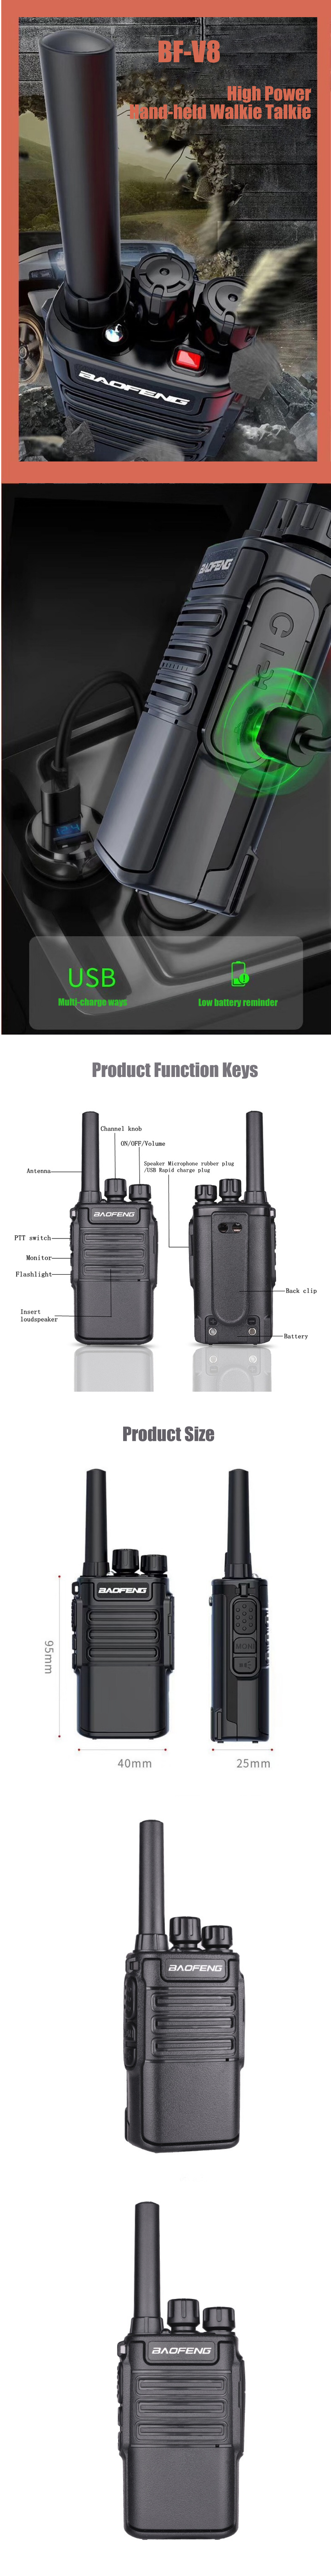 BAOFENG-V8-Portable-Wiress-Walkie-Talkie-1800mAh-Handheld-Two-Way-Radio-Communicator-Transceiver-For-1709473-1